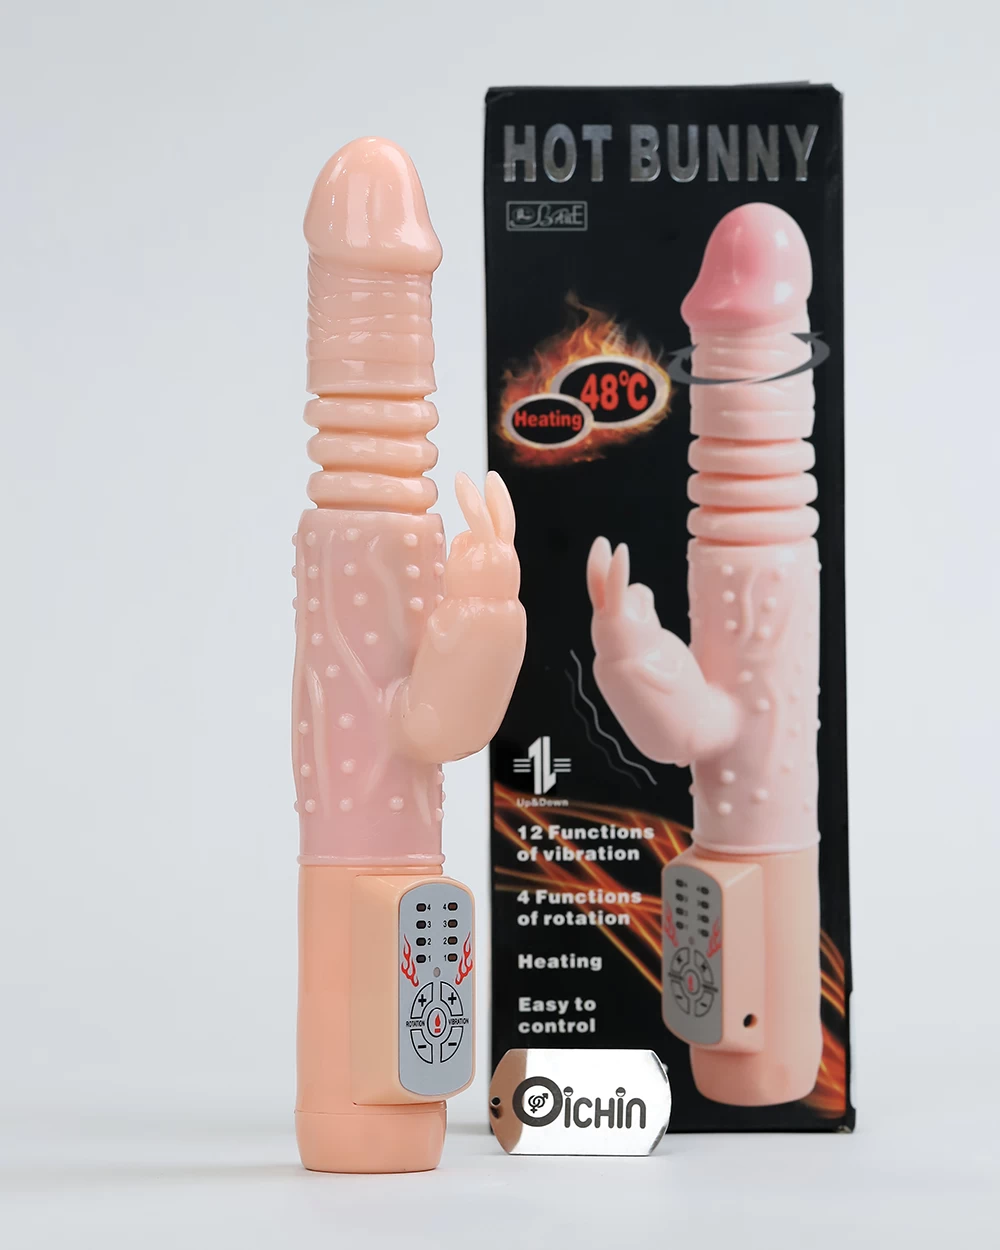  Review Lybaile Hot Bunny rung xoay thụt tỏa nhiệt size nhỏ hàng xách tay